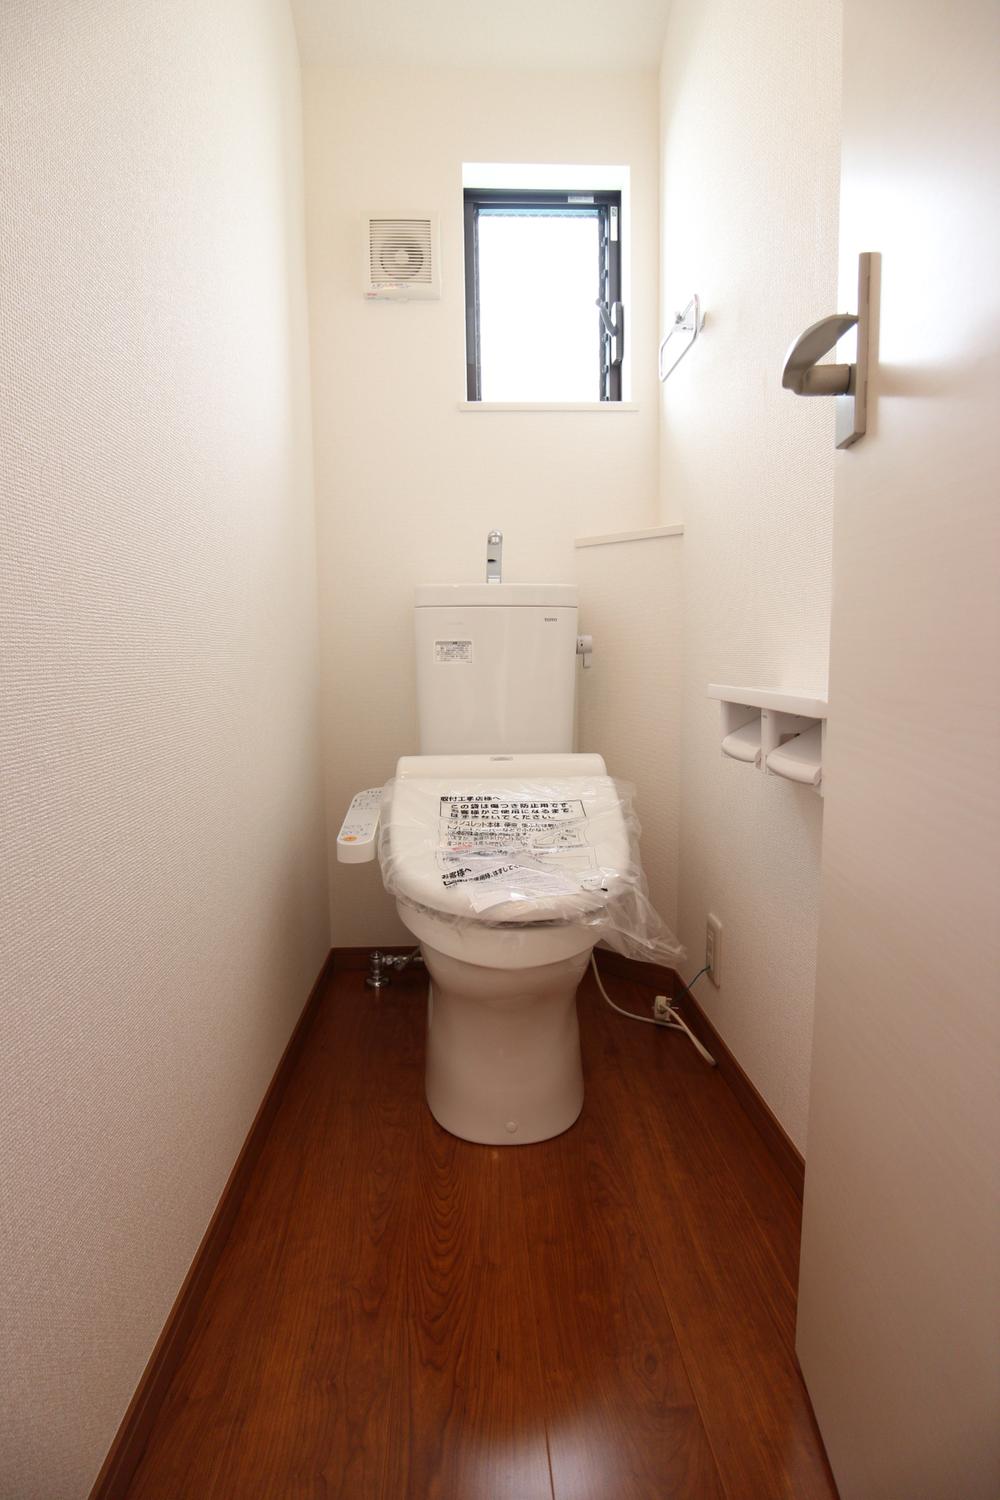 Toilet. Indoor (12 May 2013) shooting bright shower toilet!